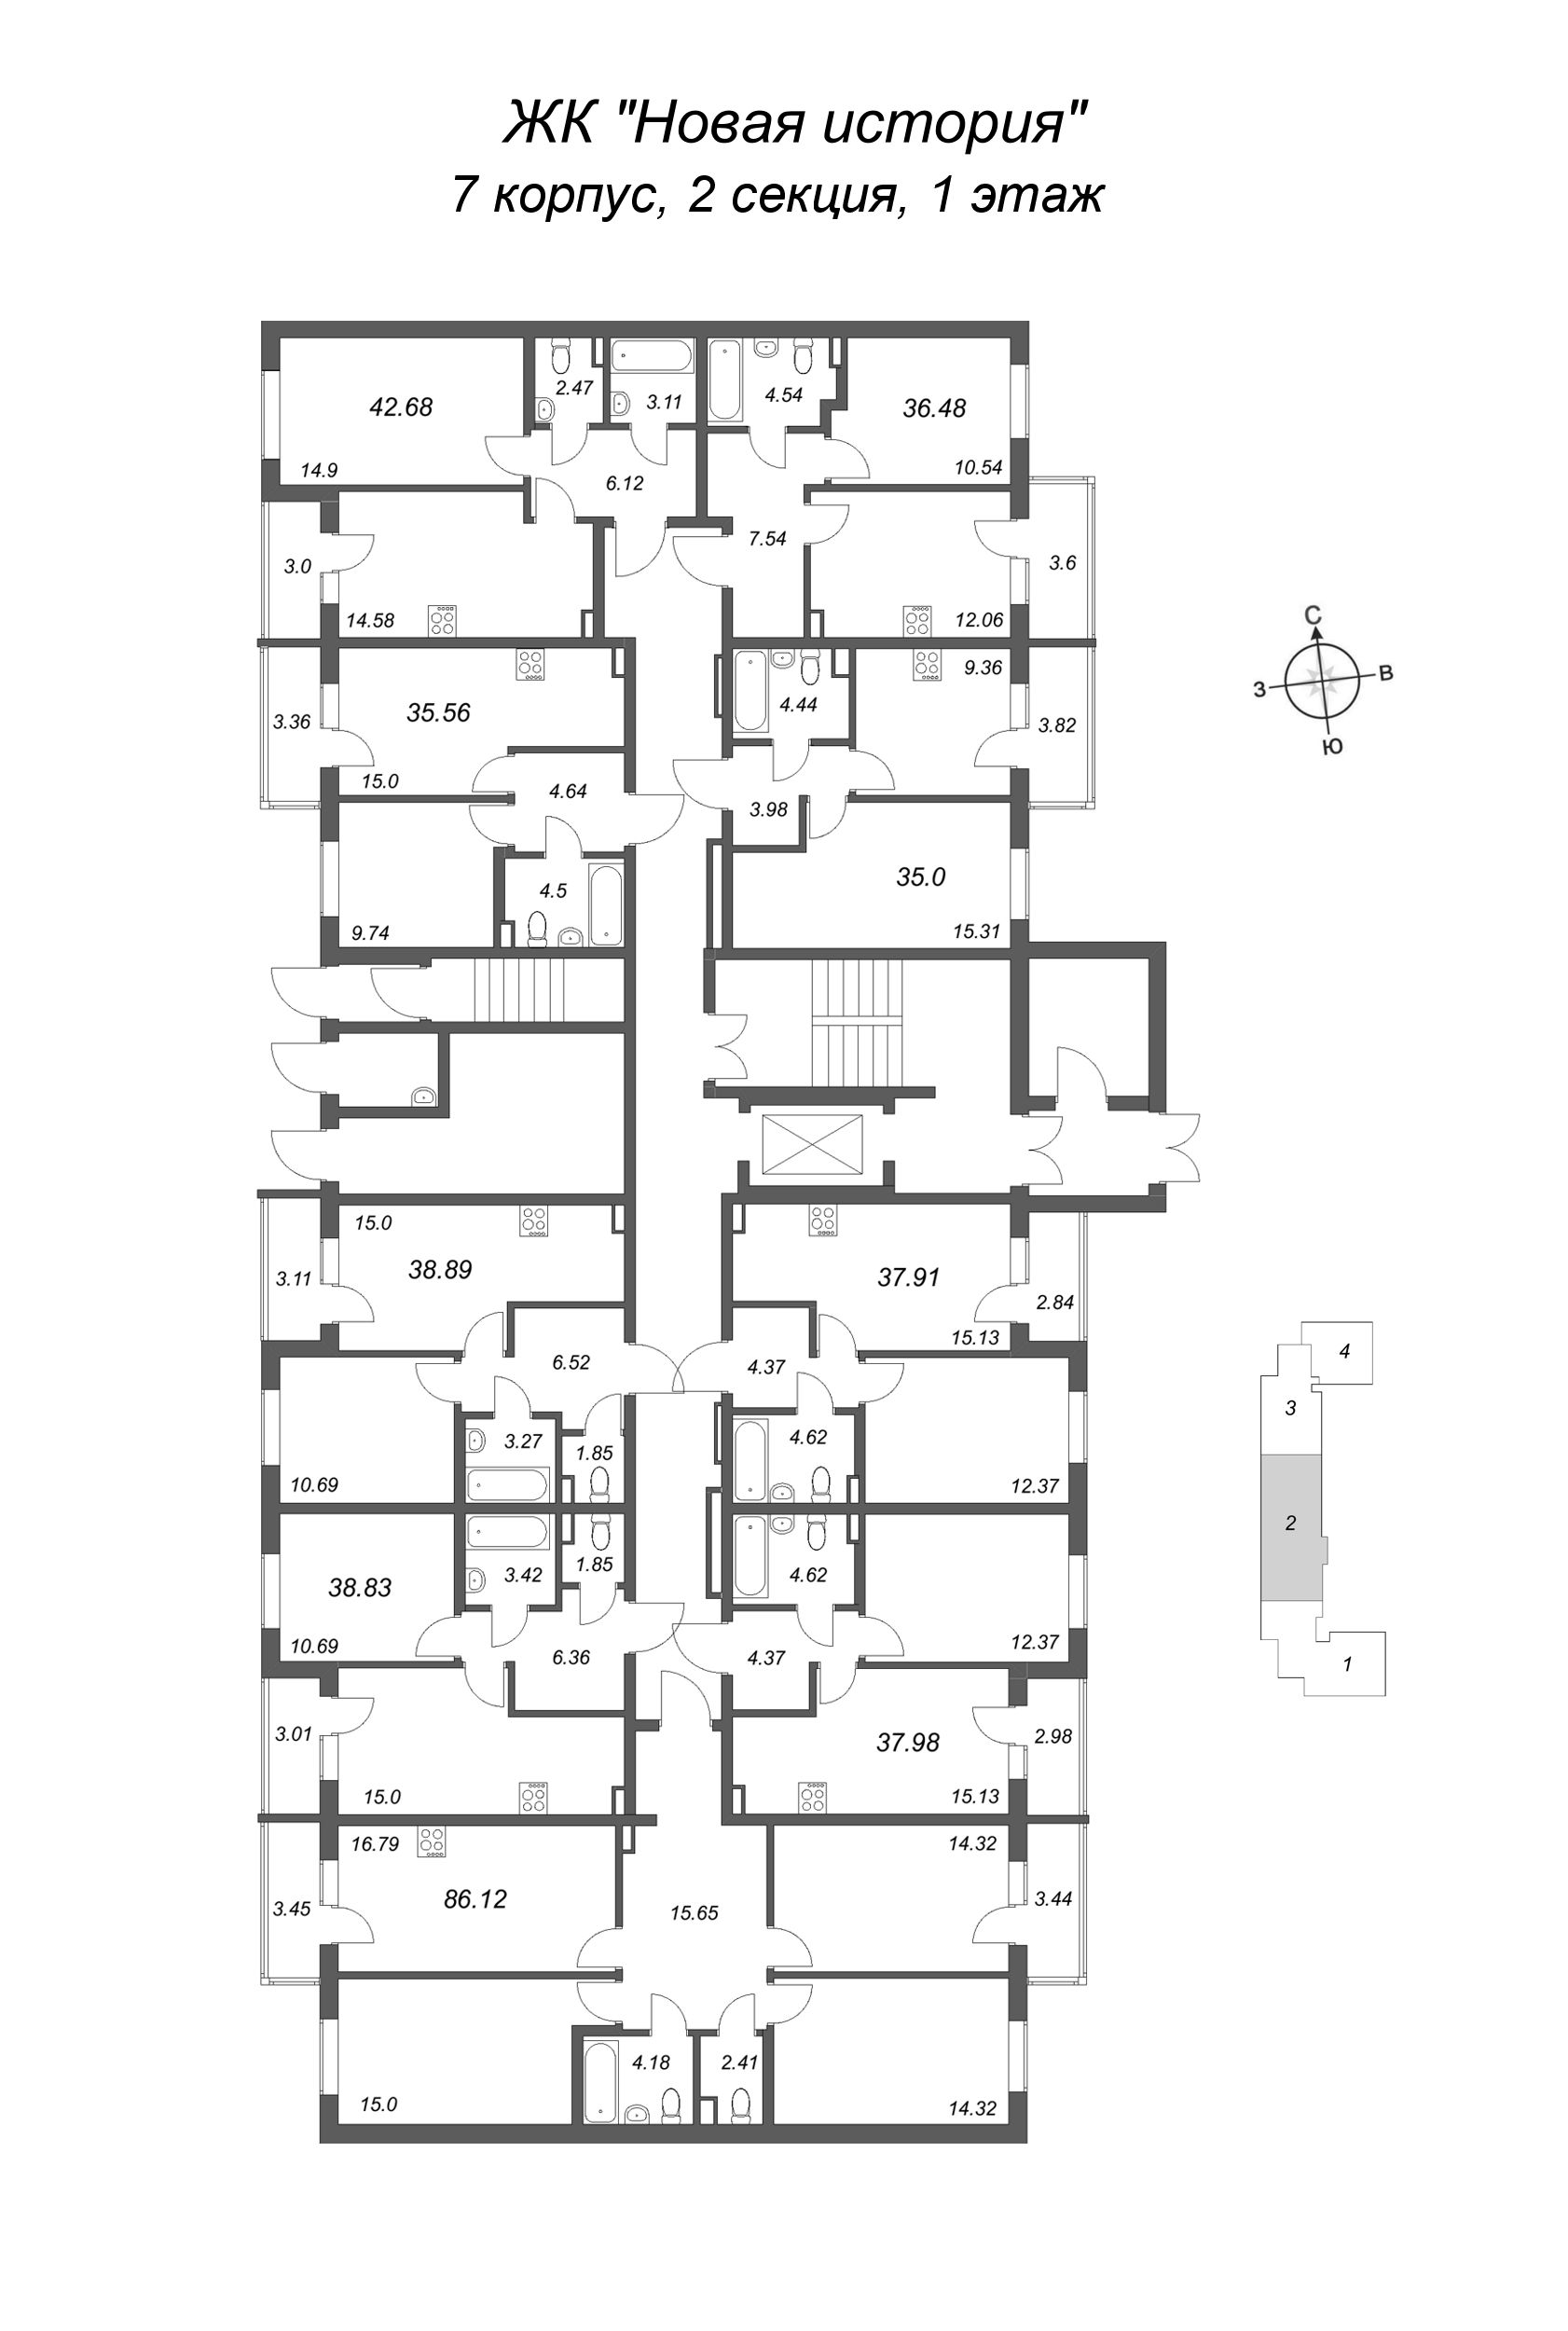 2-комнатная (Евро) квартира, 35.56 м² - планировка этажа